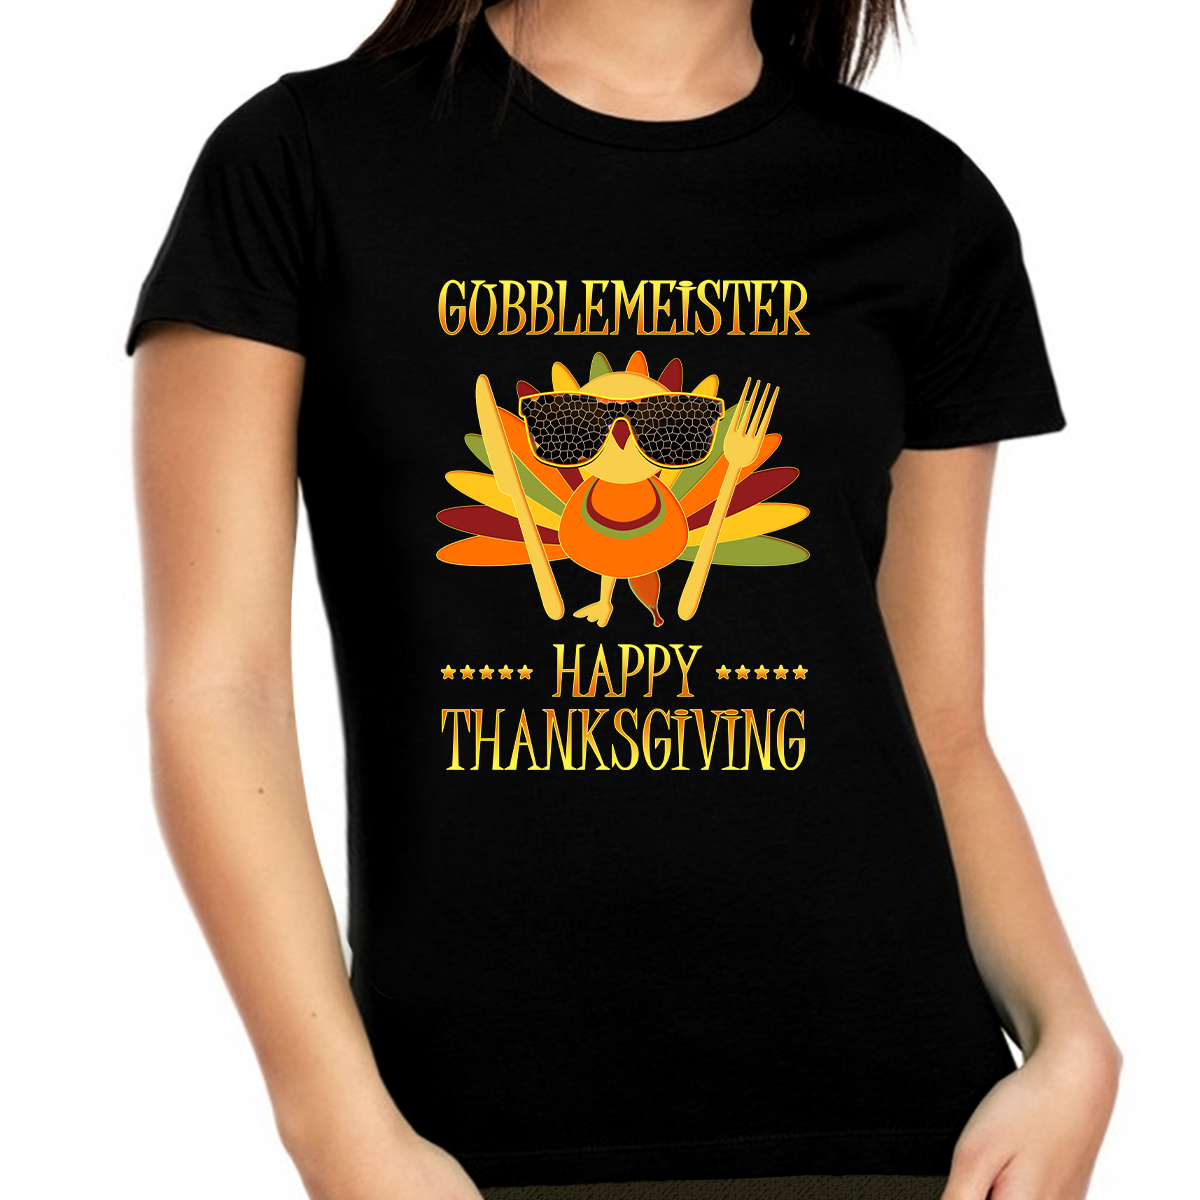 Cute Thanksgiving Shirts for Plus Size Women Gobble Turkey Shirt for Women 1X 2X 3X 4X 5X Thanksgiving Shirt